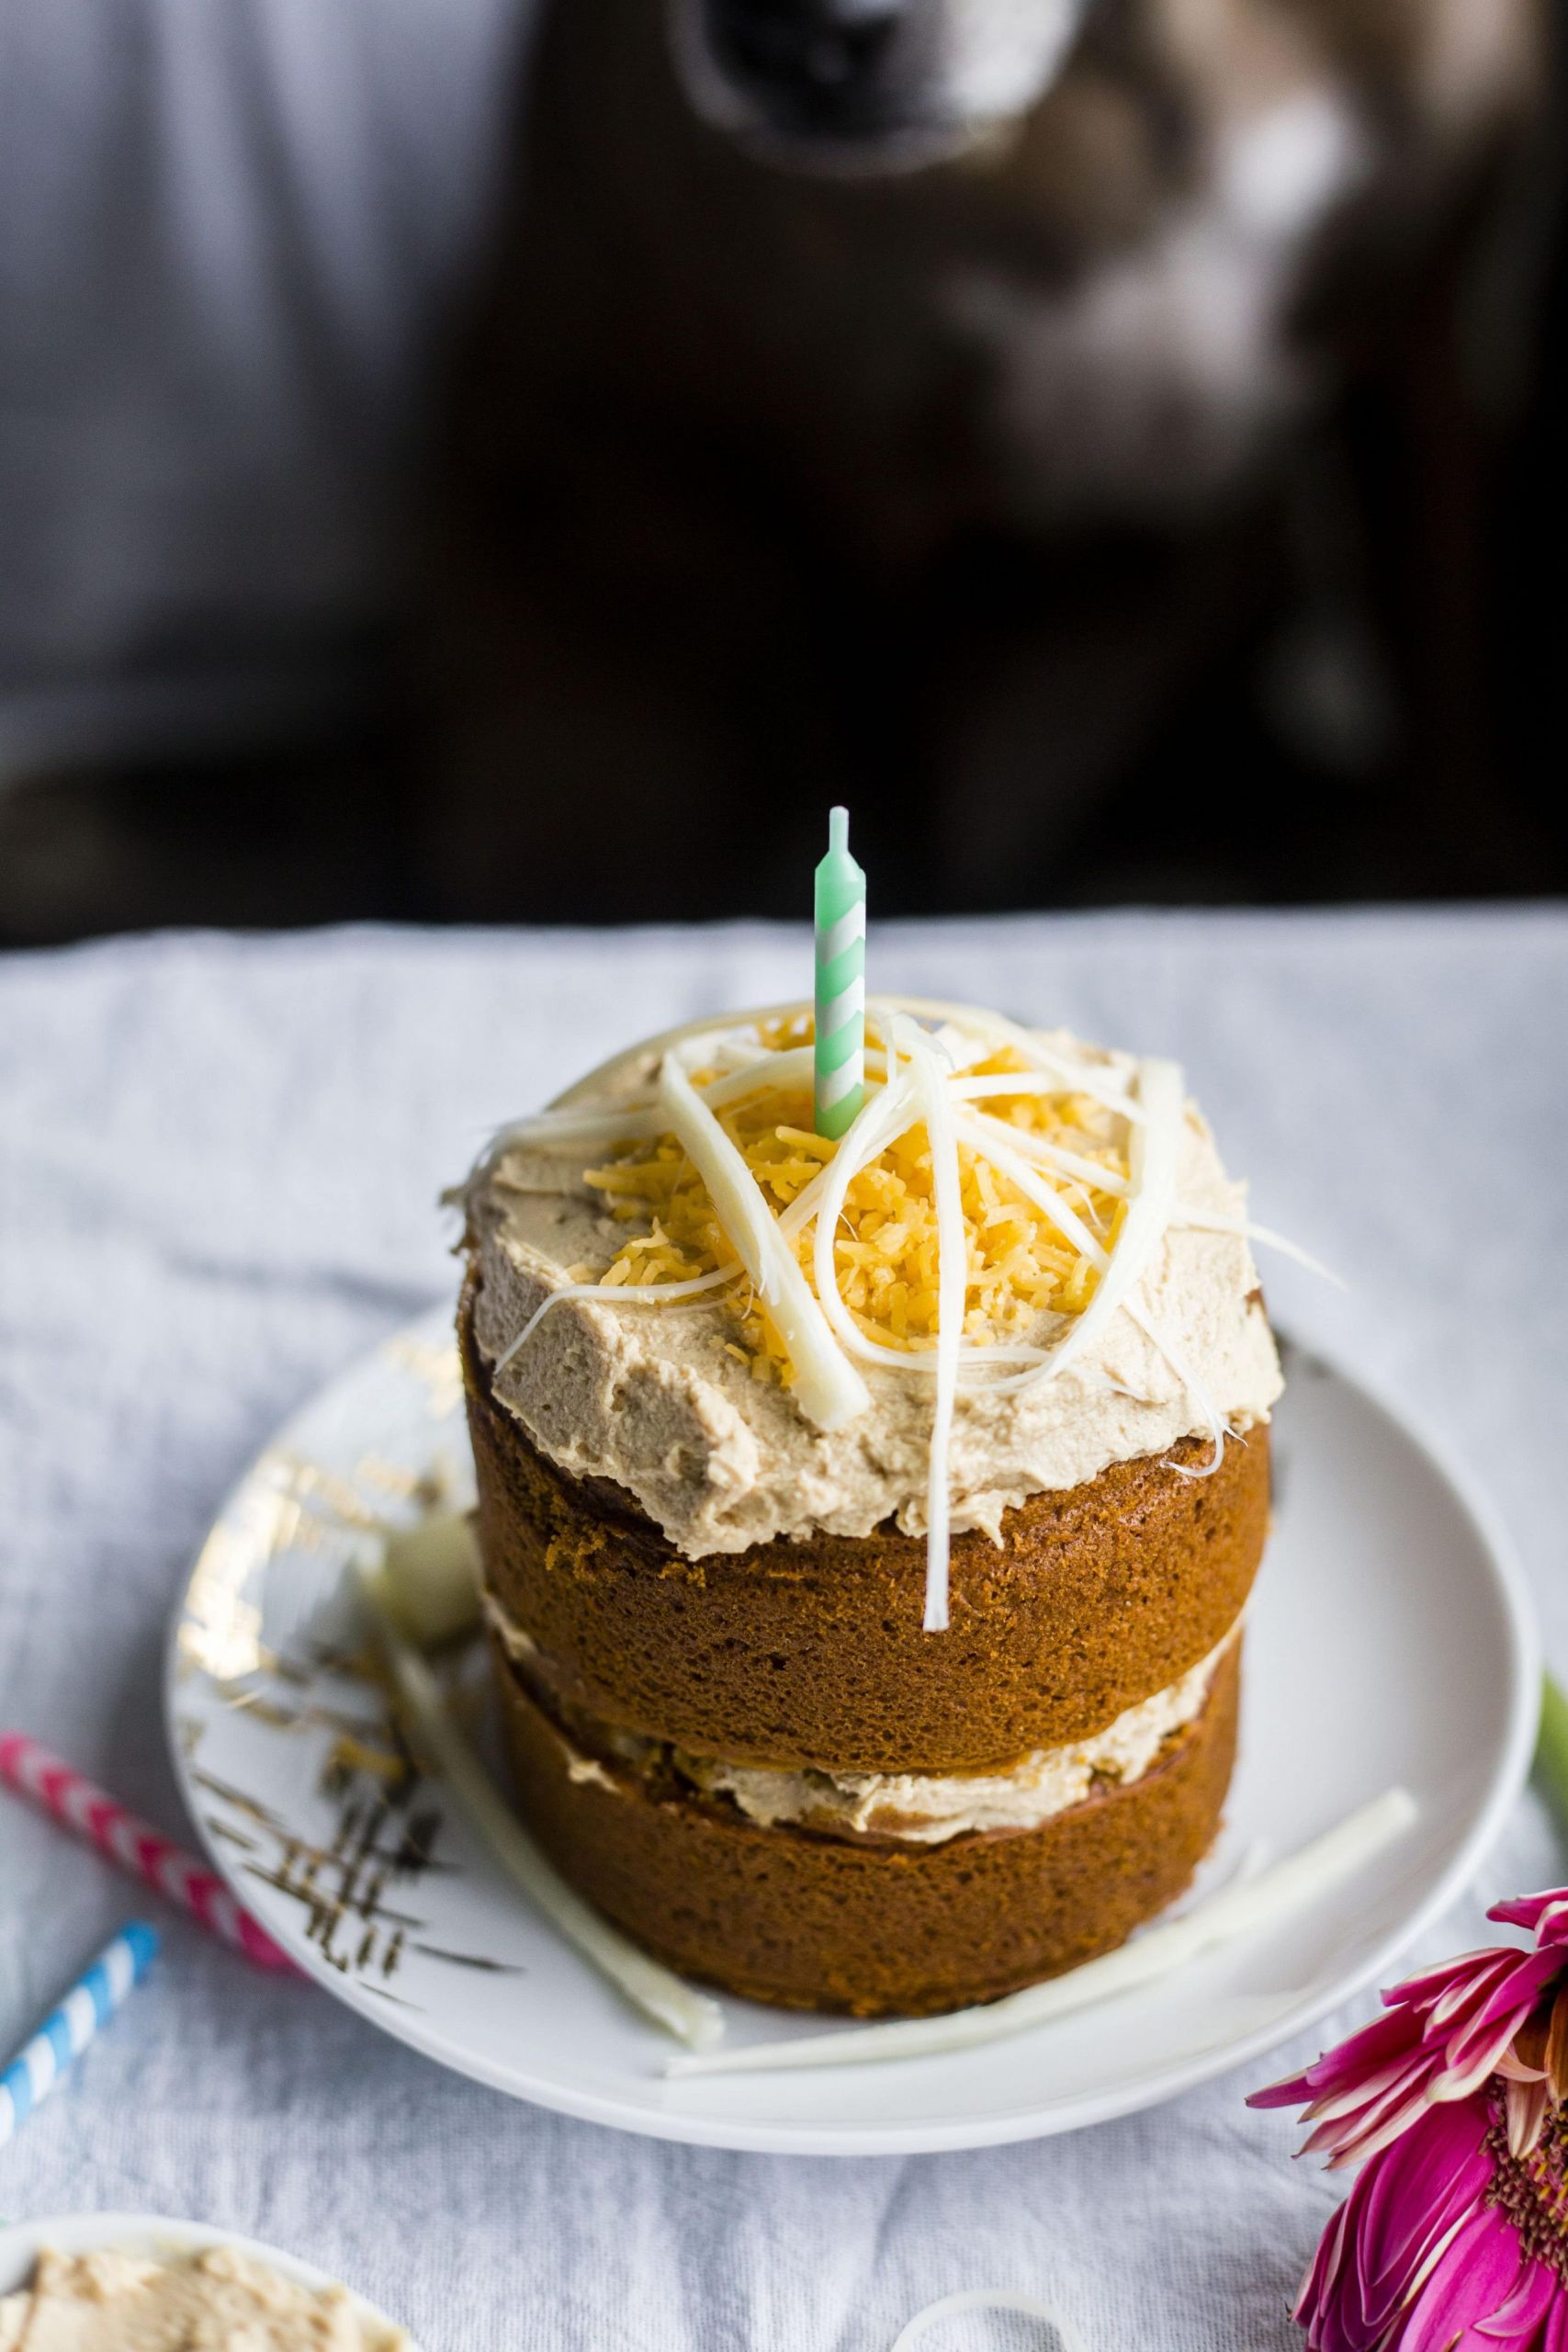 How To Make A Birthday Cake For A Dog
 Mini Dog Birthday Cake